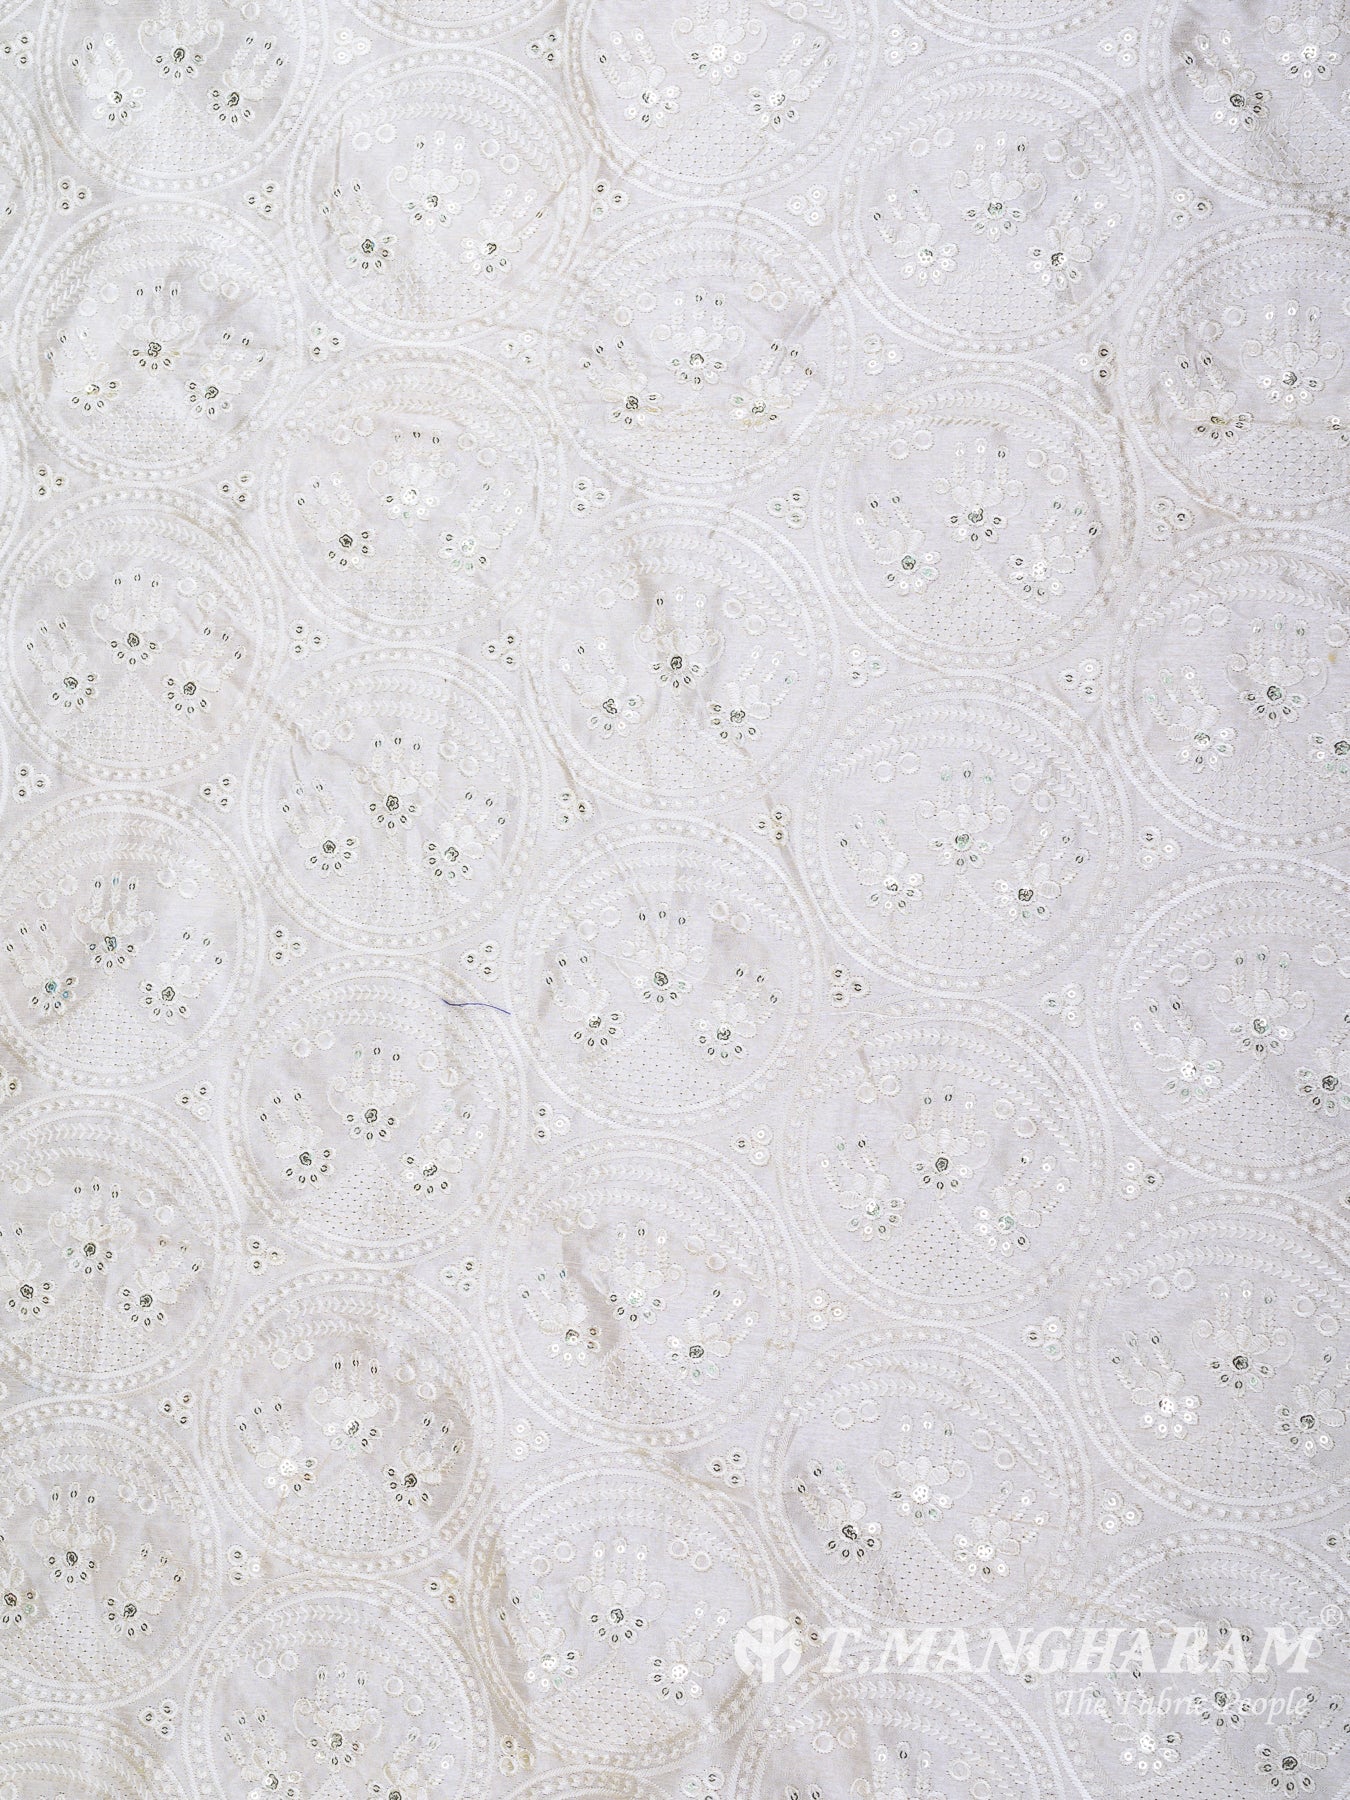 White Raw Silk Fabric - EB5706 view-3